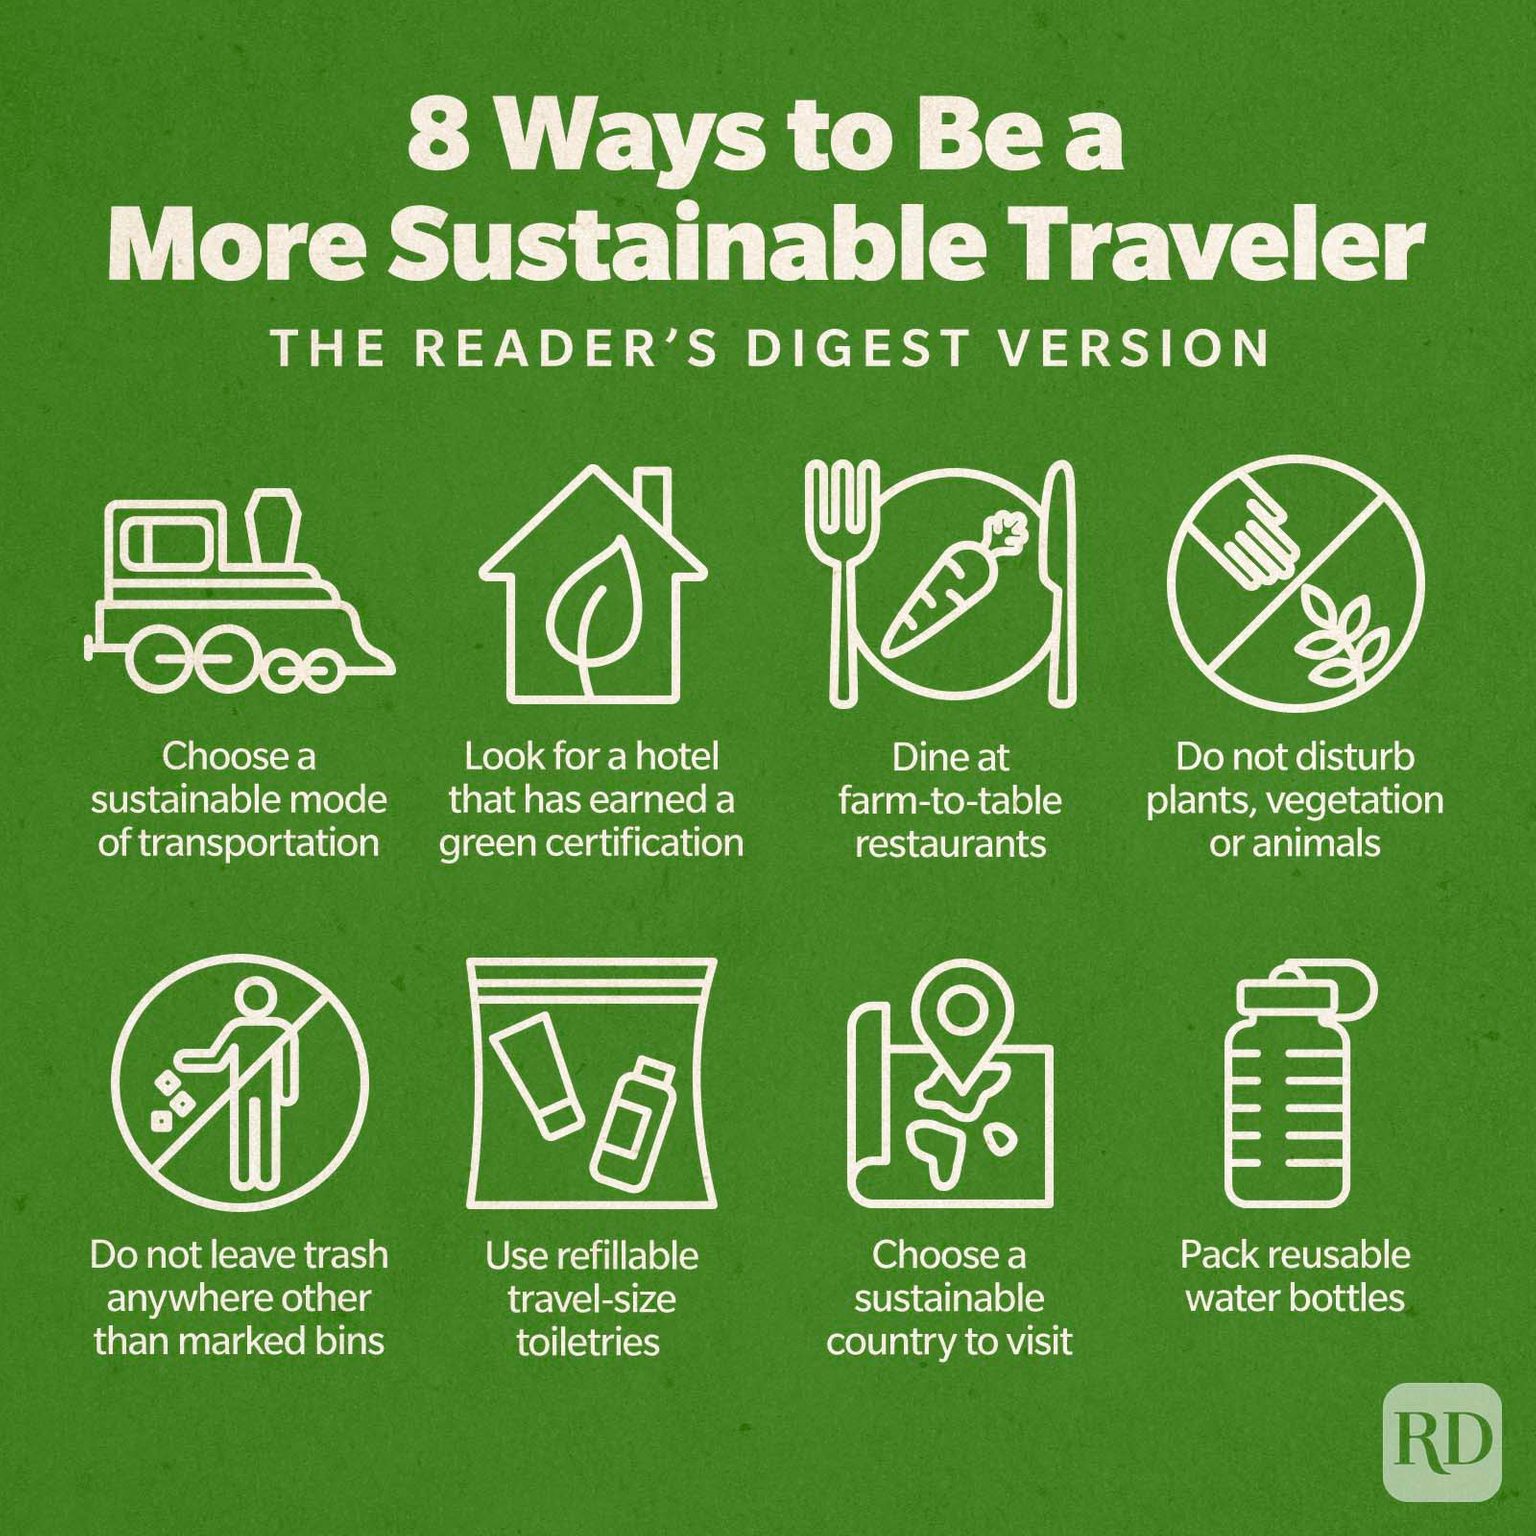 ways to travel more sustainably testo